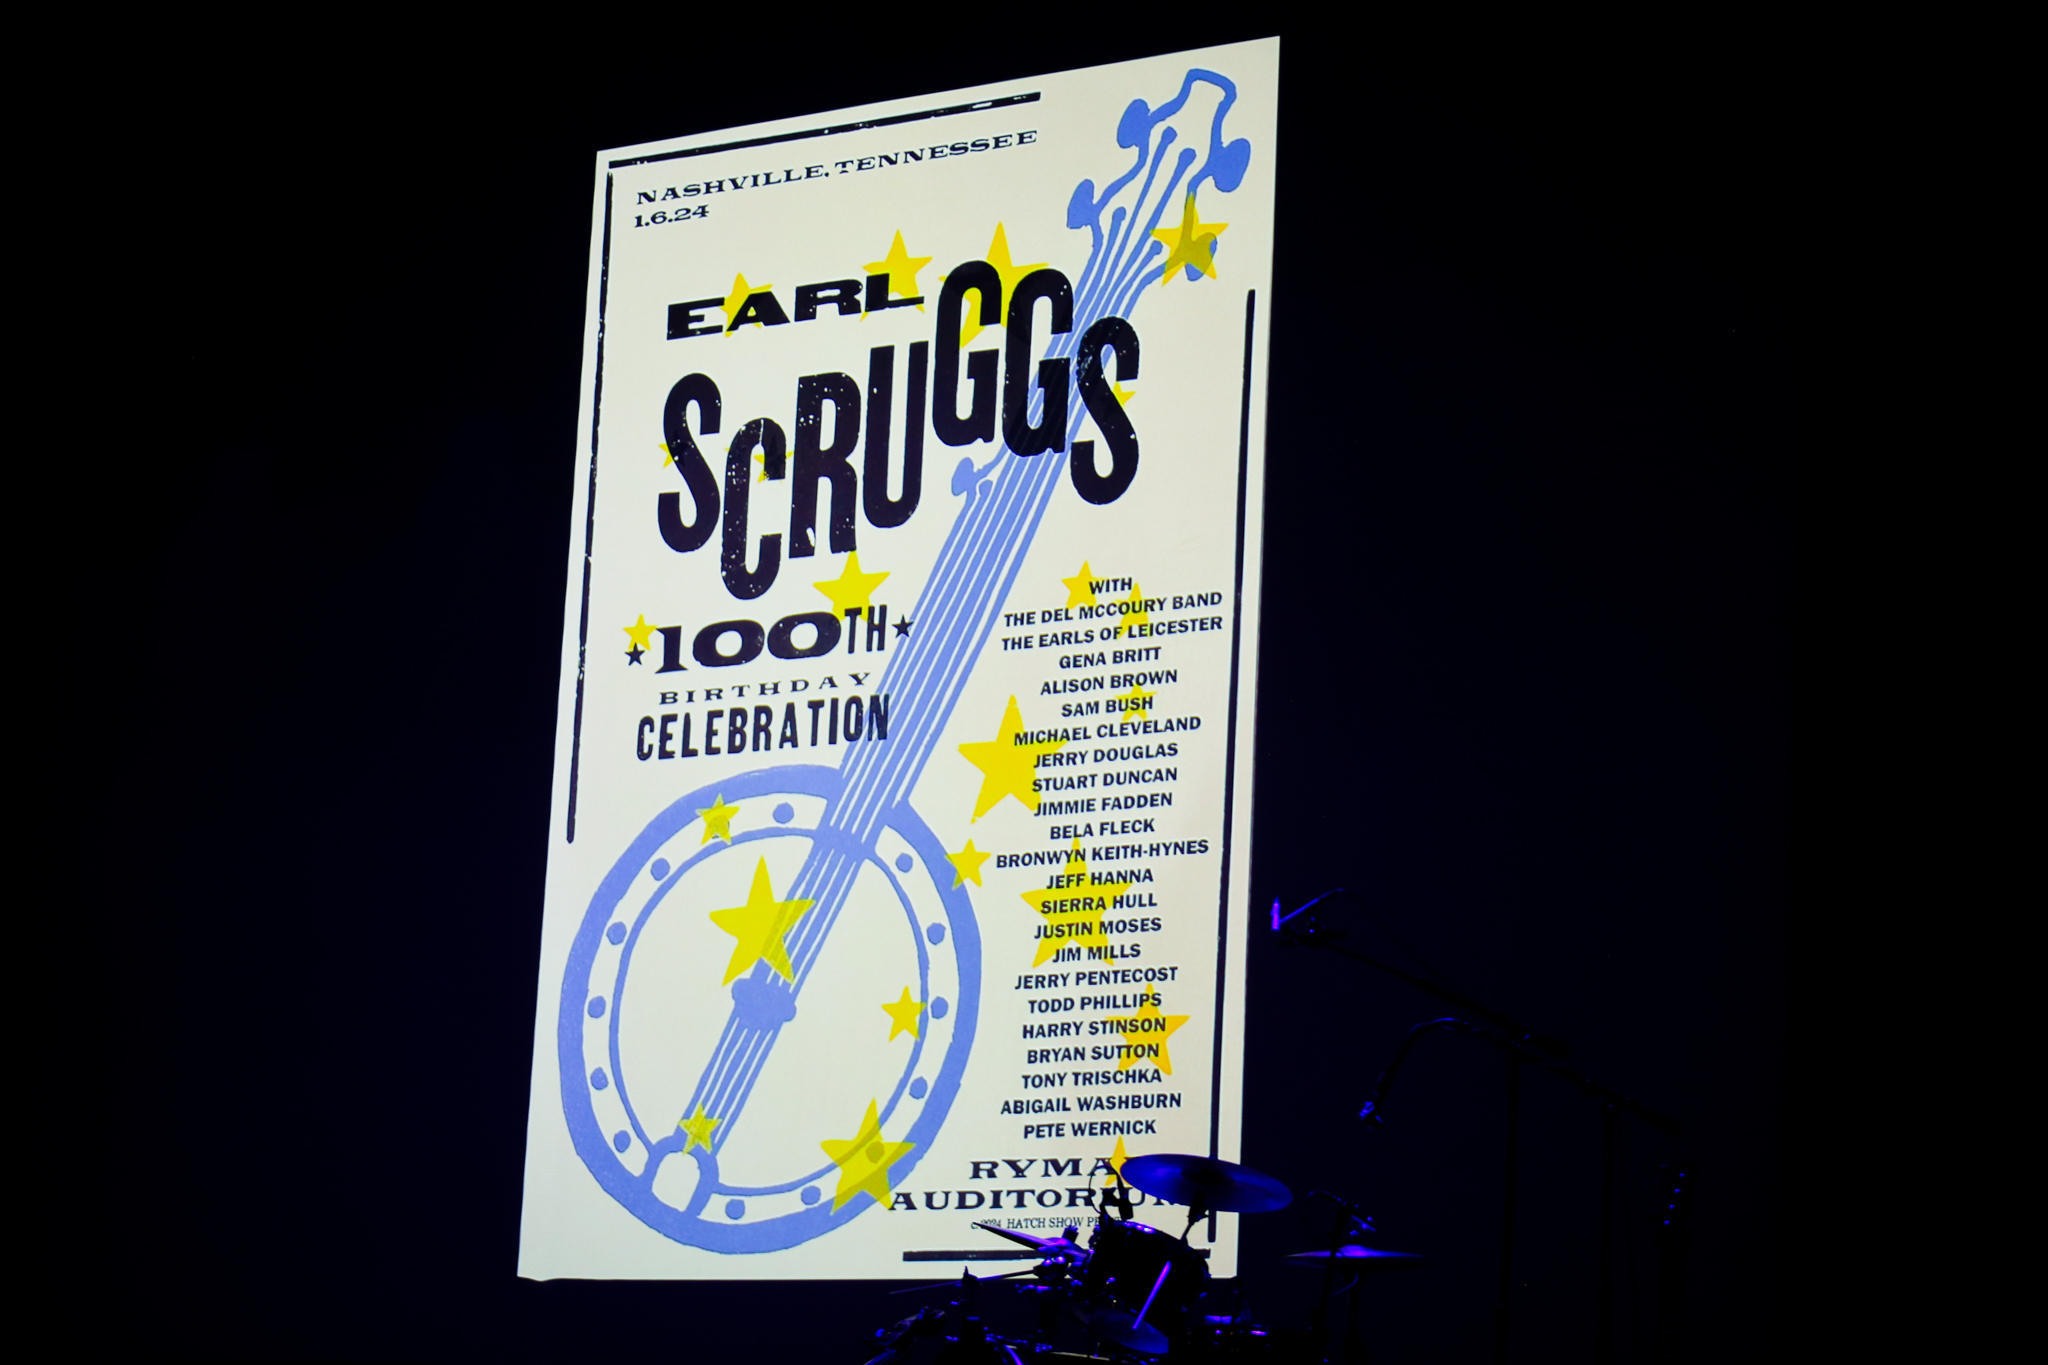 The Earl Scruggs 100th Celebration in Nashville at Ryman auditorium